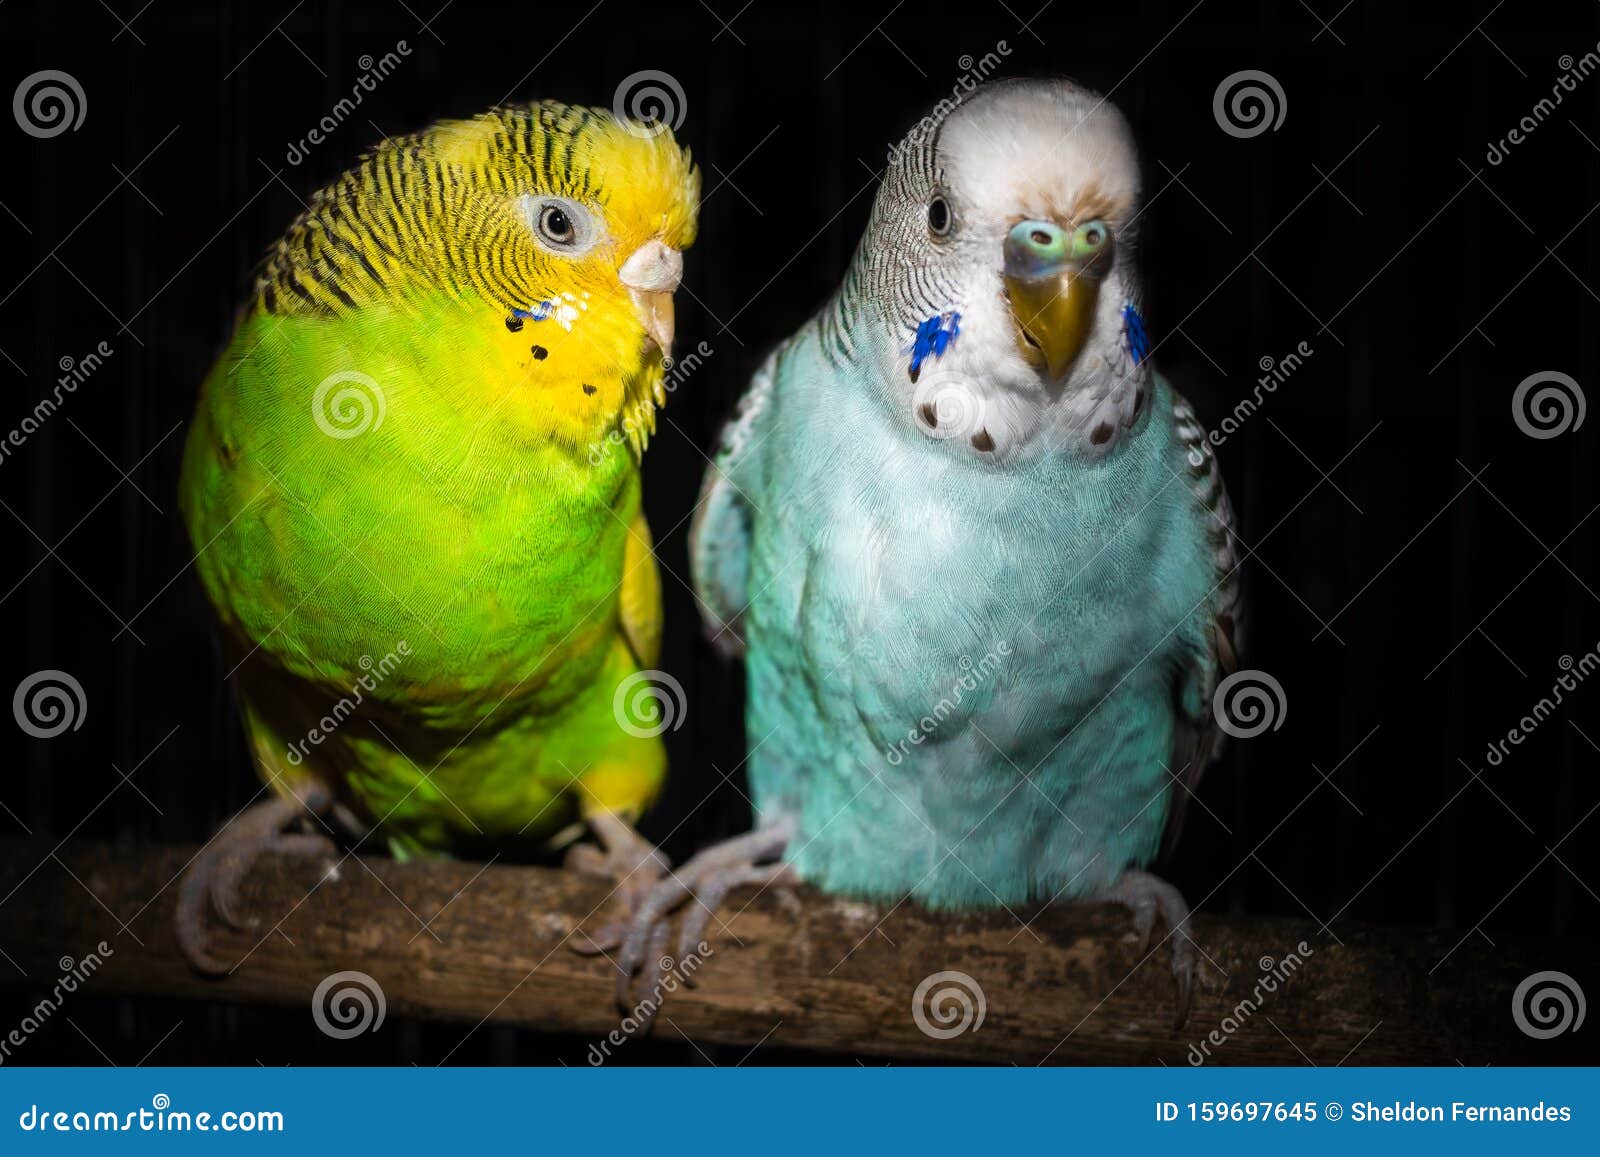 Love birds stock image. Image of love, lovebirds, parakeets ...